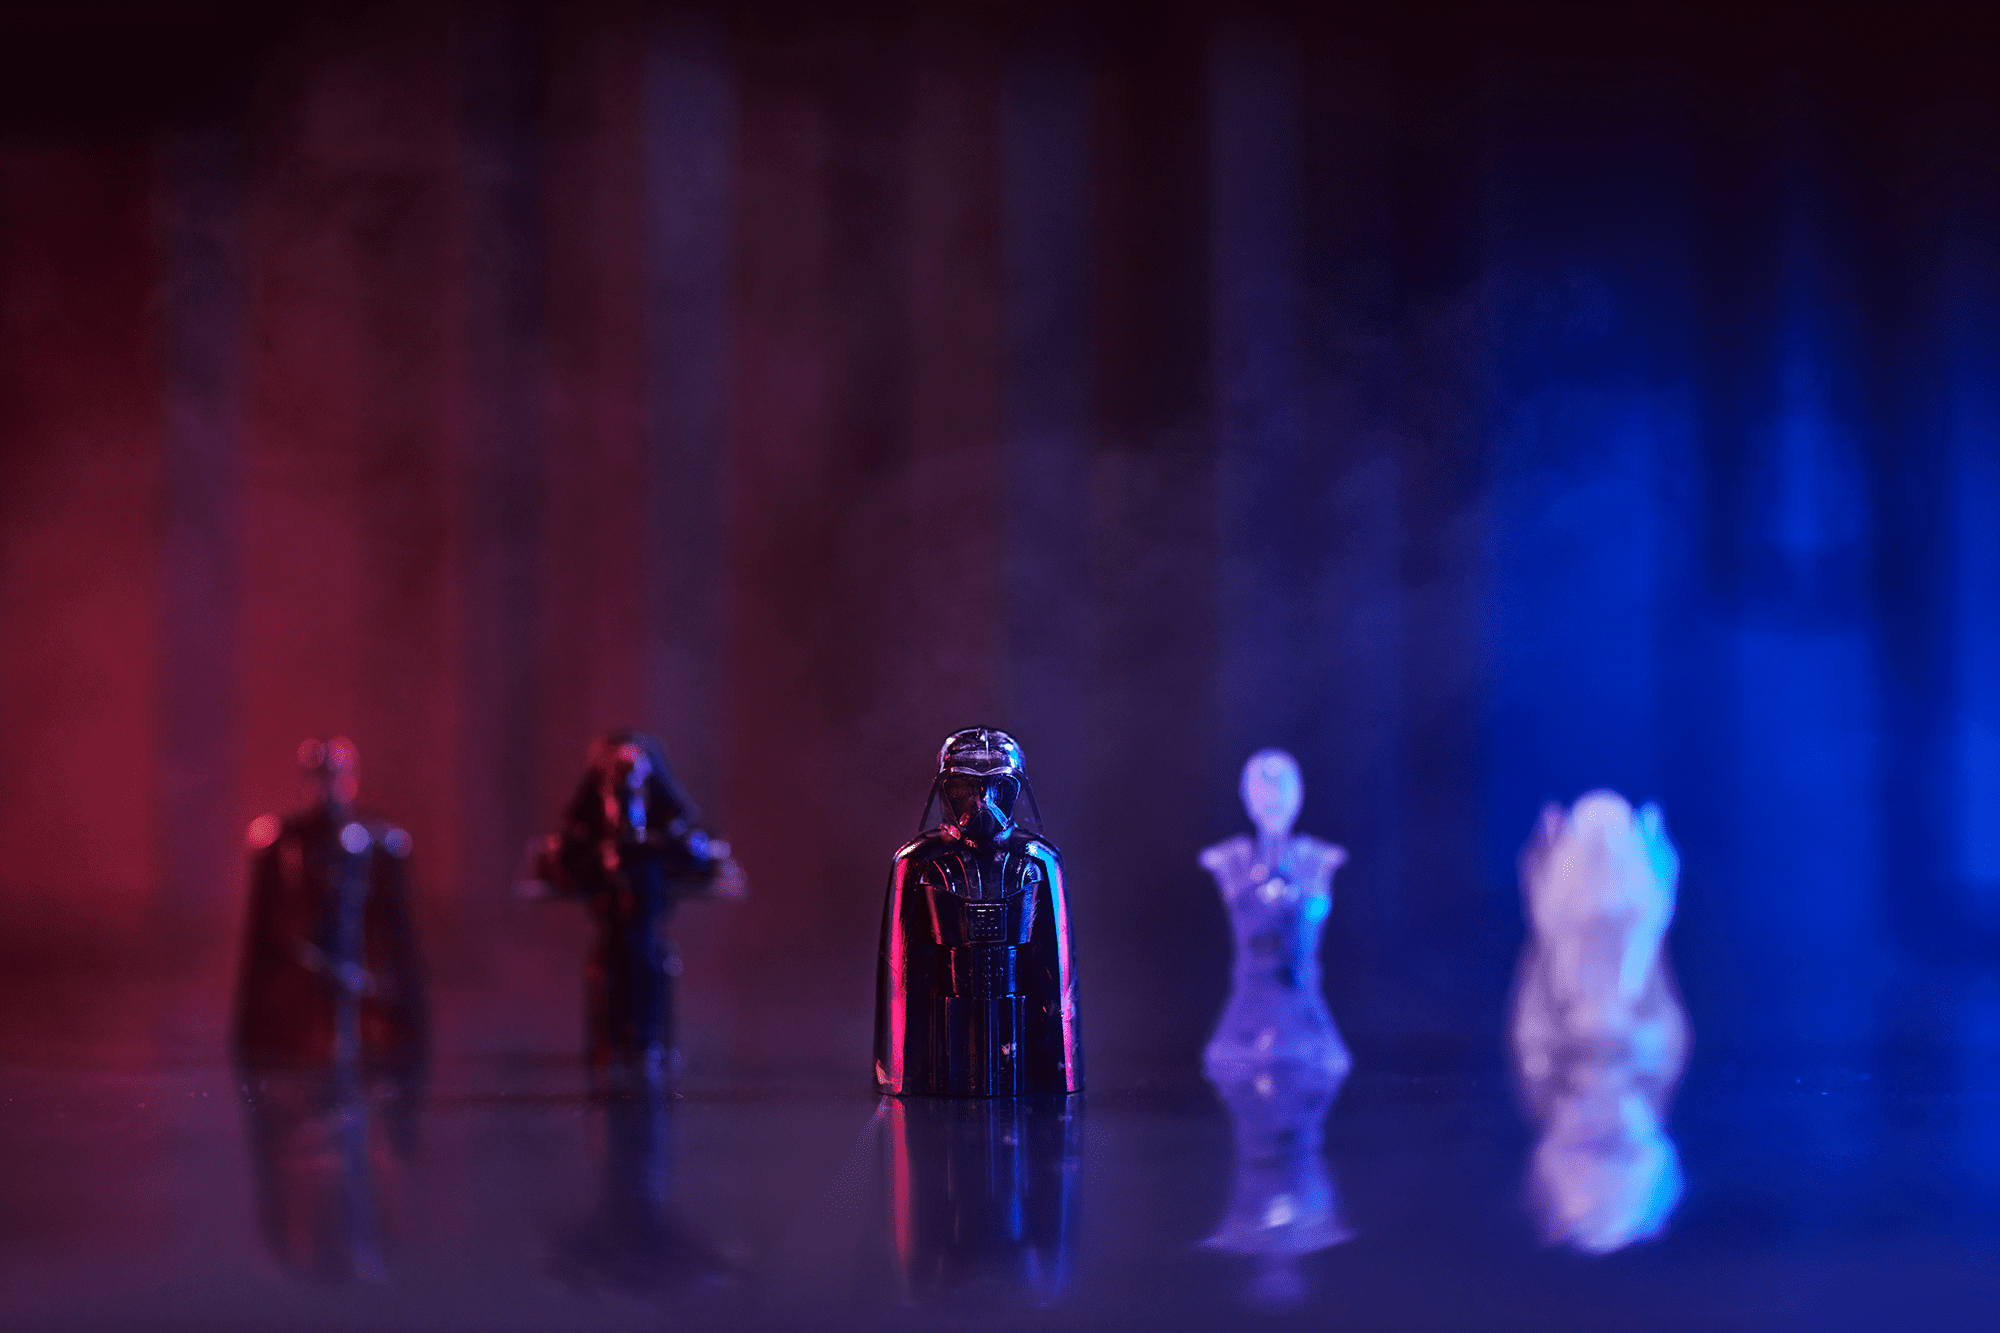 
Star Wars Villainous: Power of the Dark Side movers